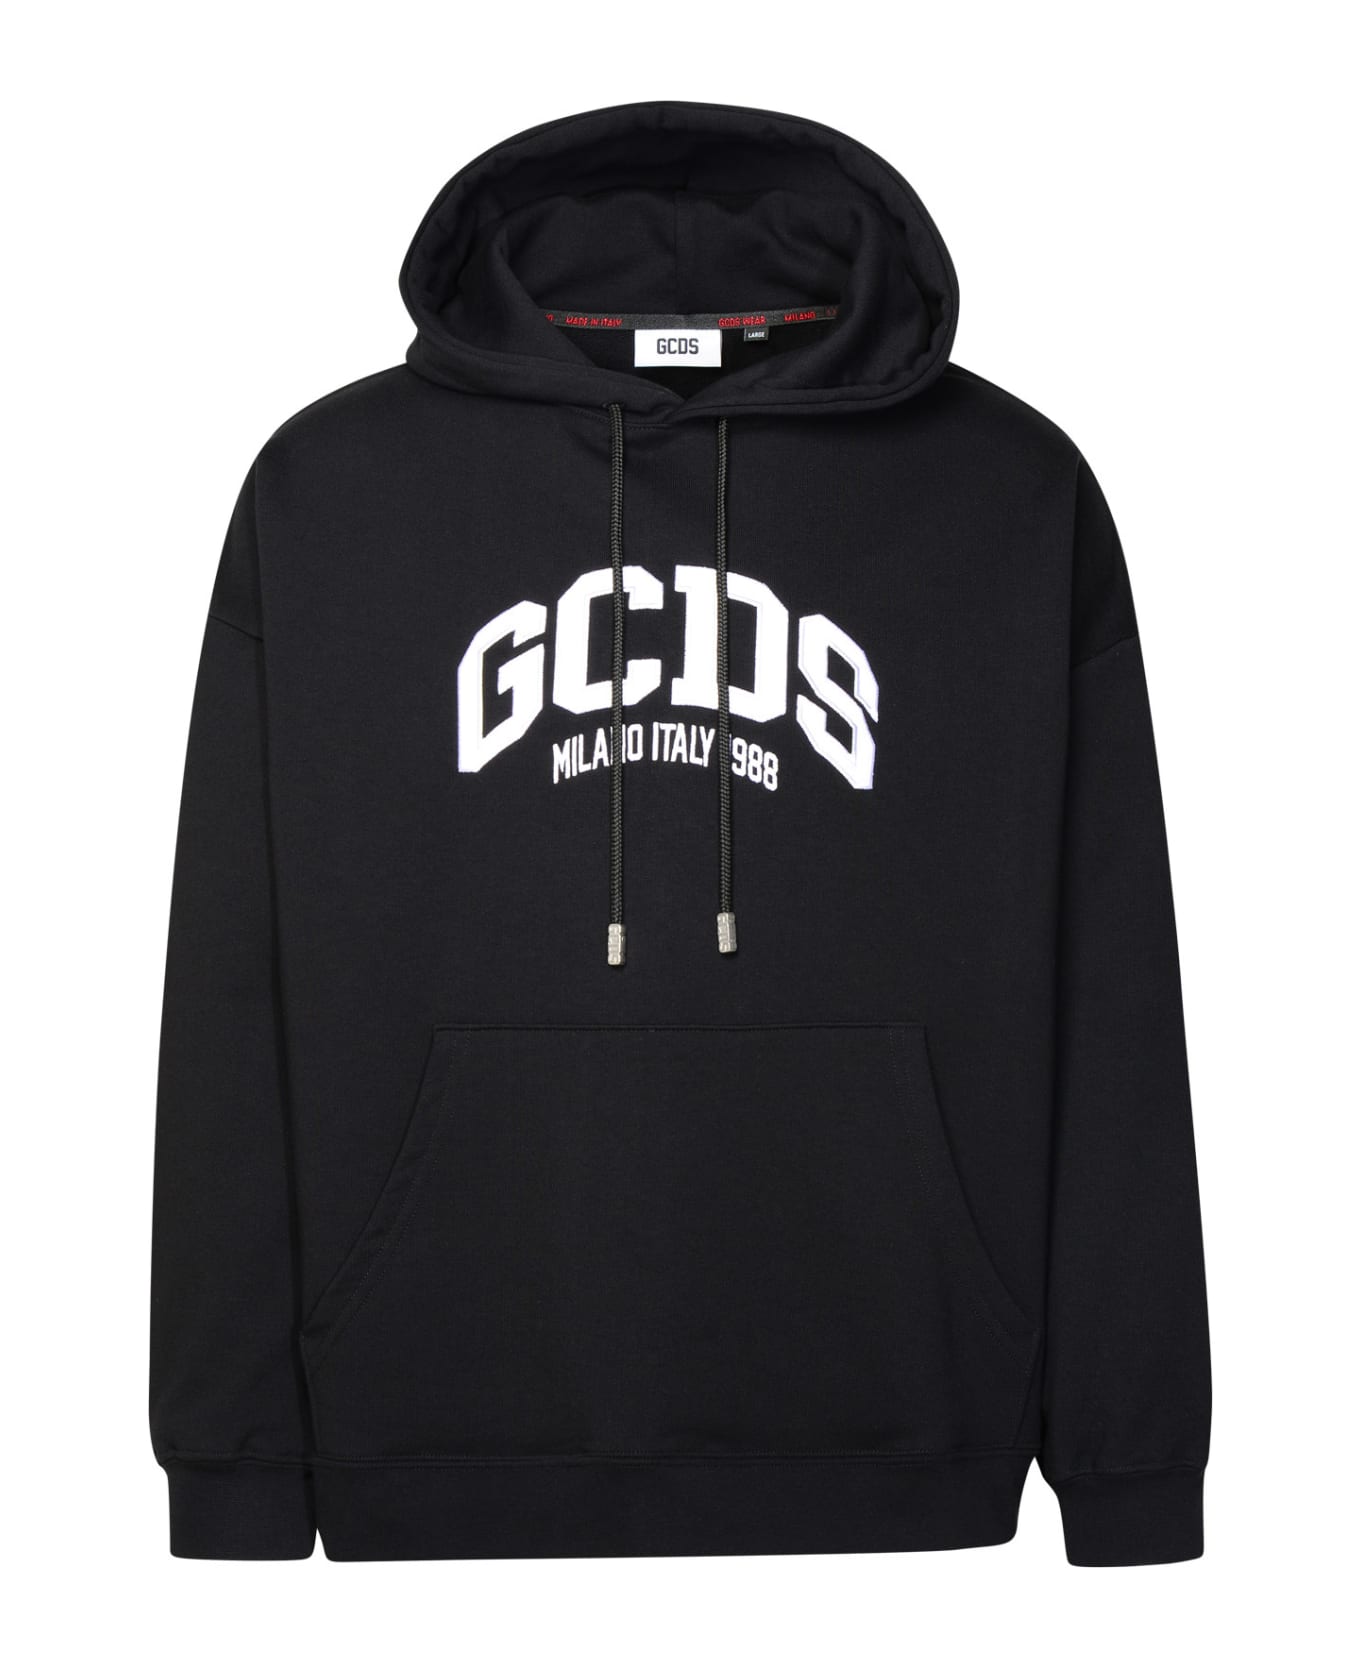 GCDS Black Cotton Sweatshirt - Nero